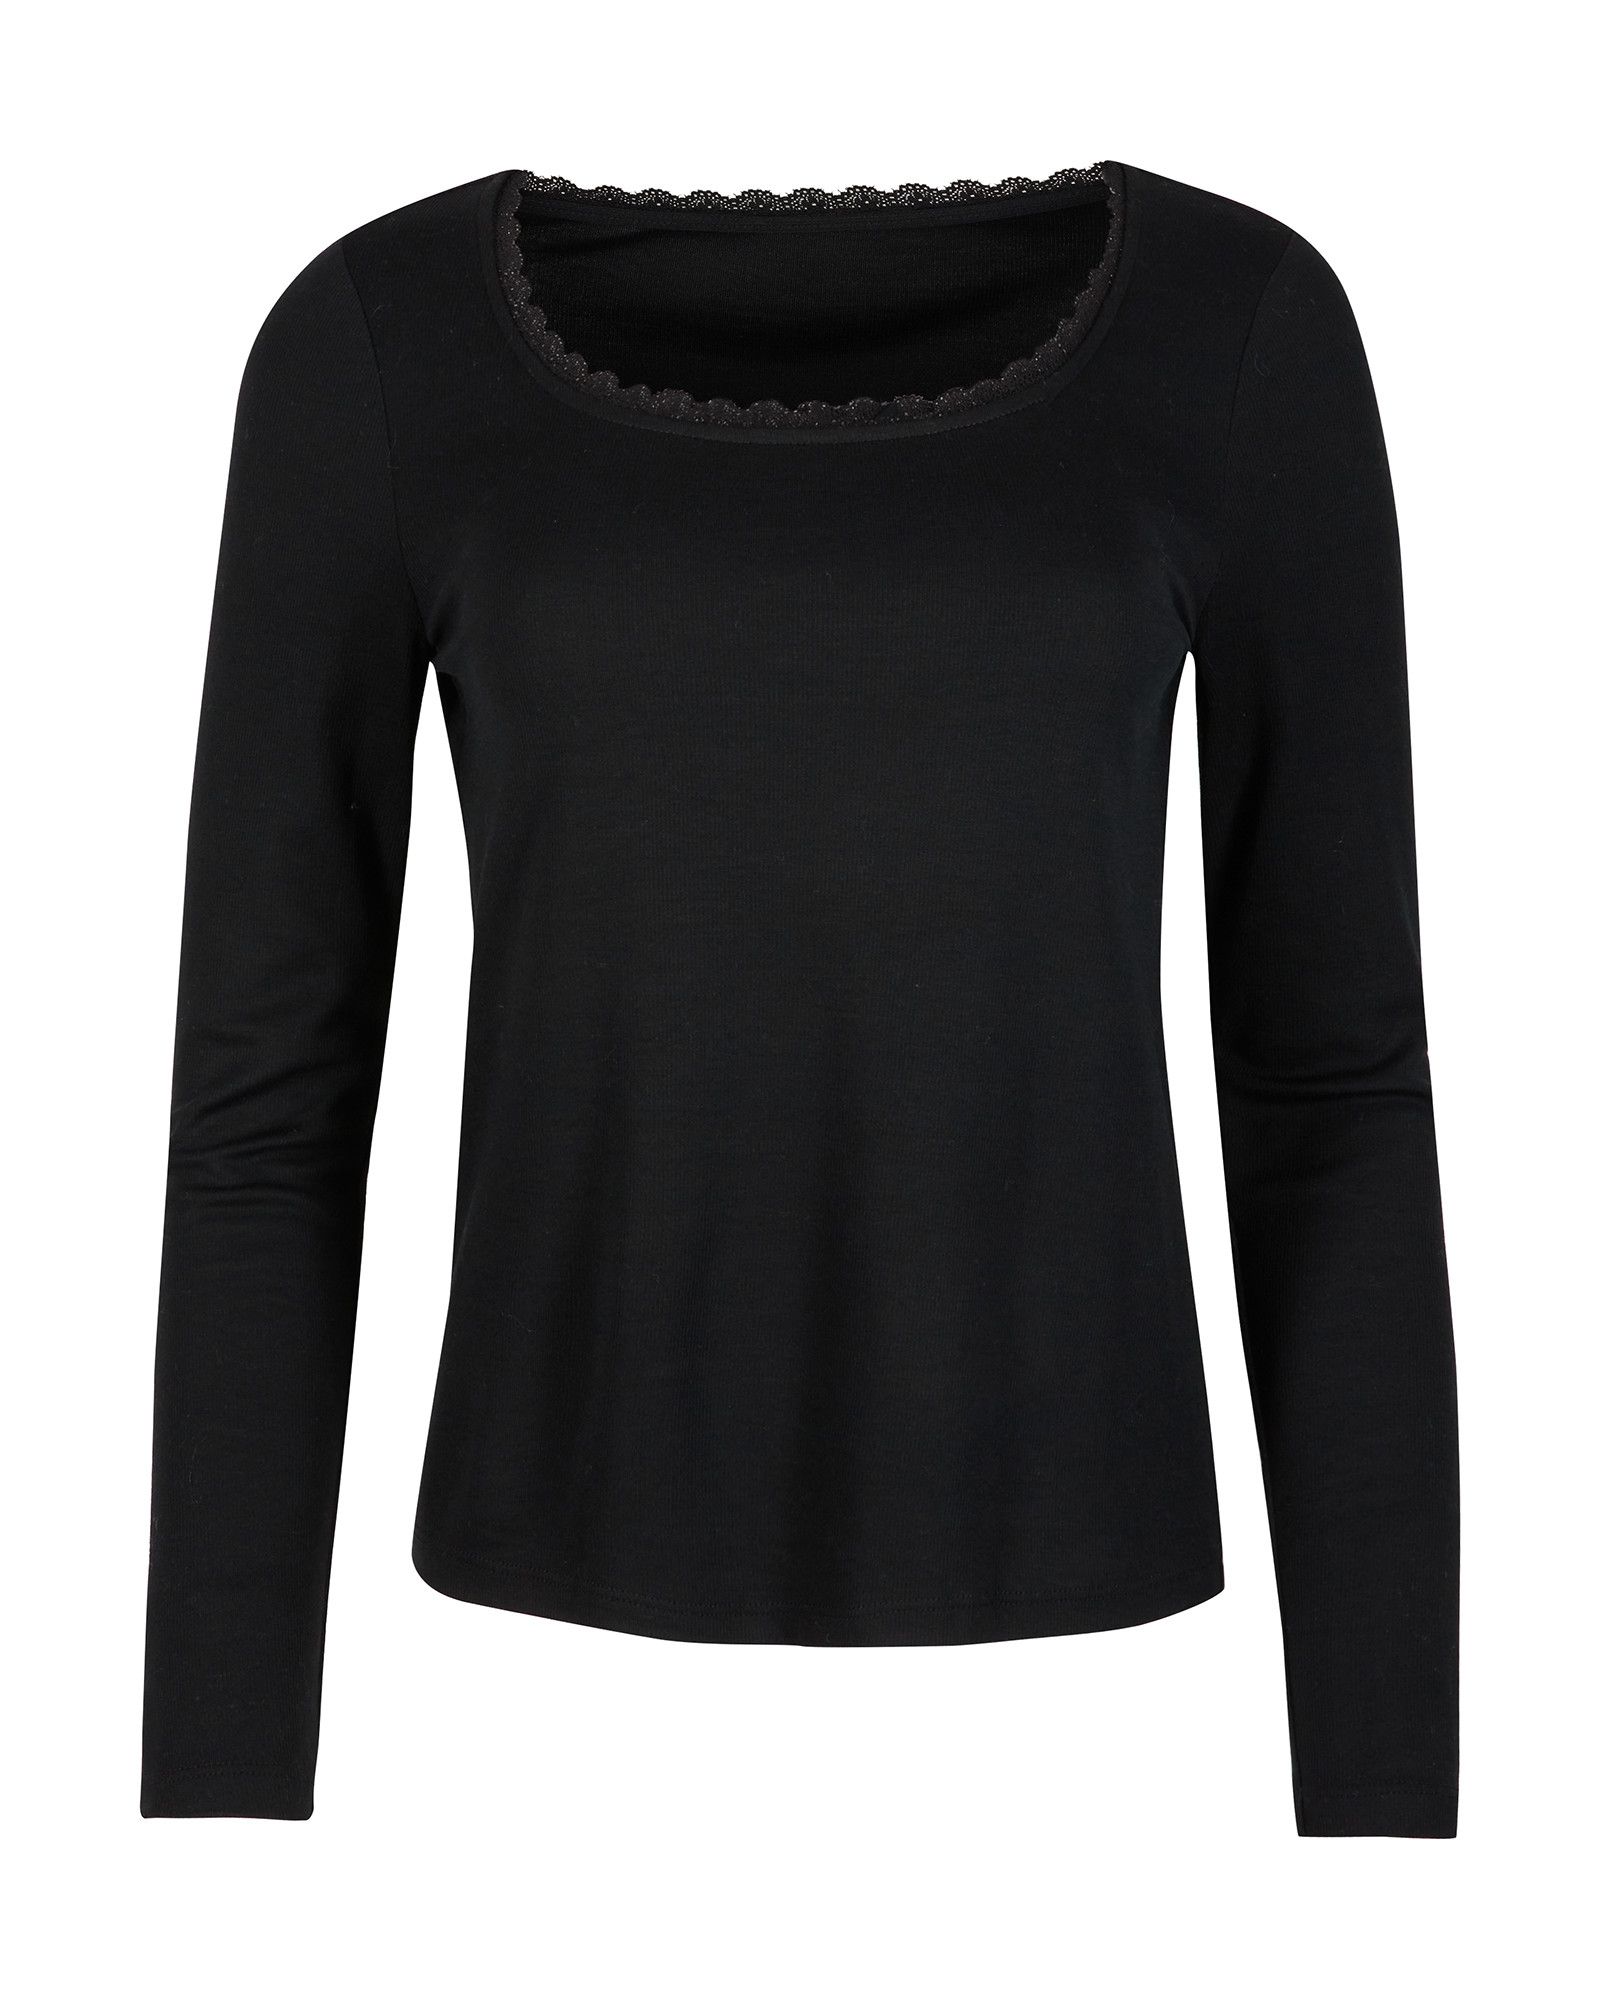 Lace Trim Black Jersey Long Sleeve Top | Oliver Bonas